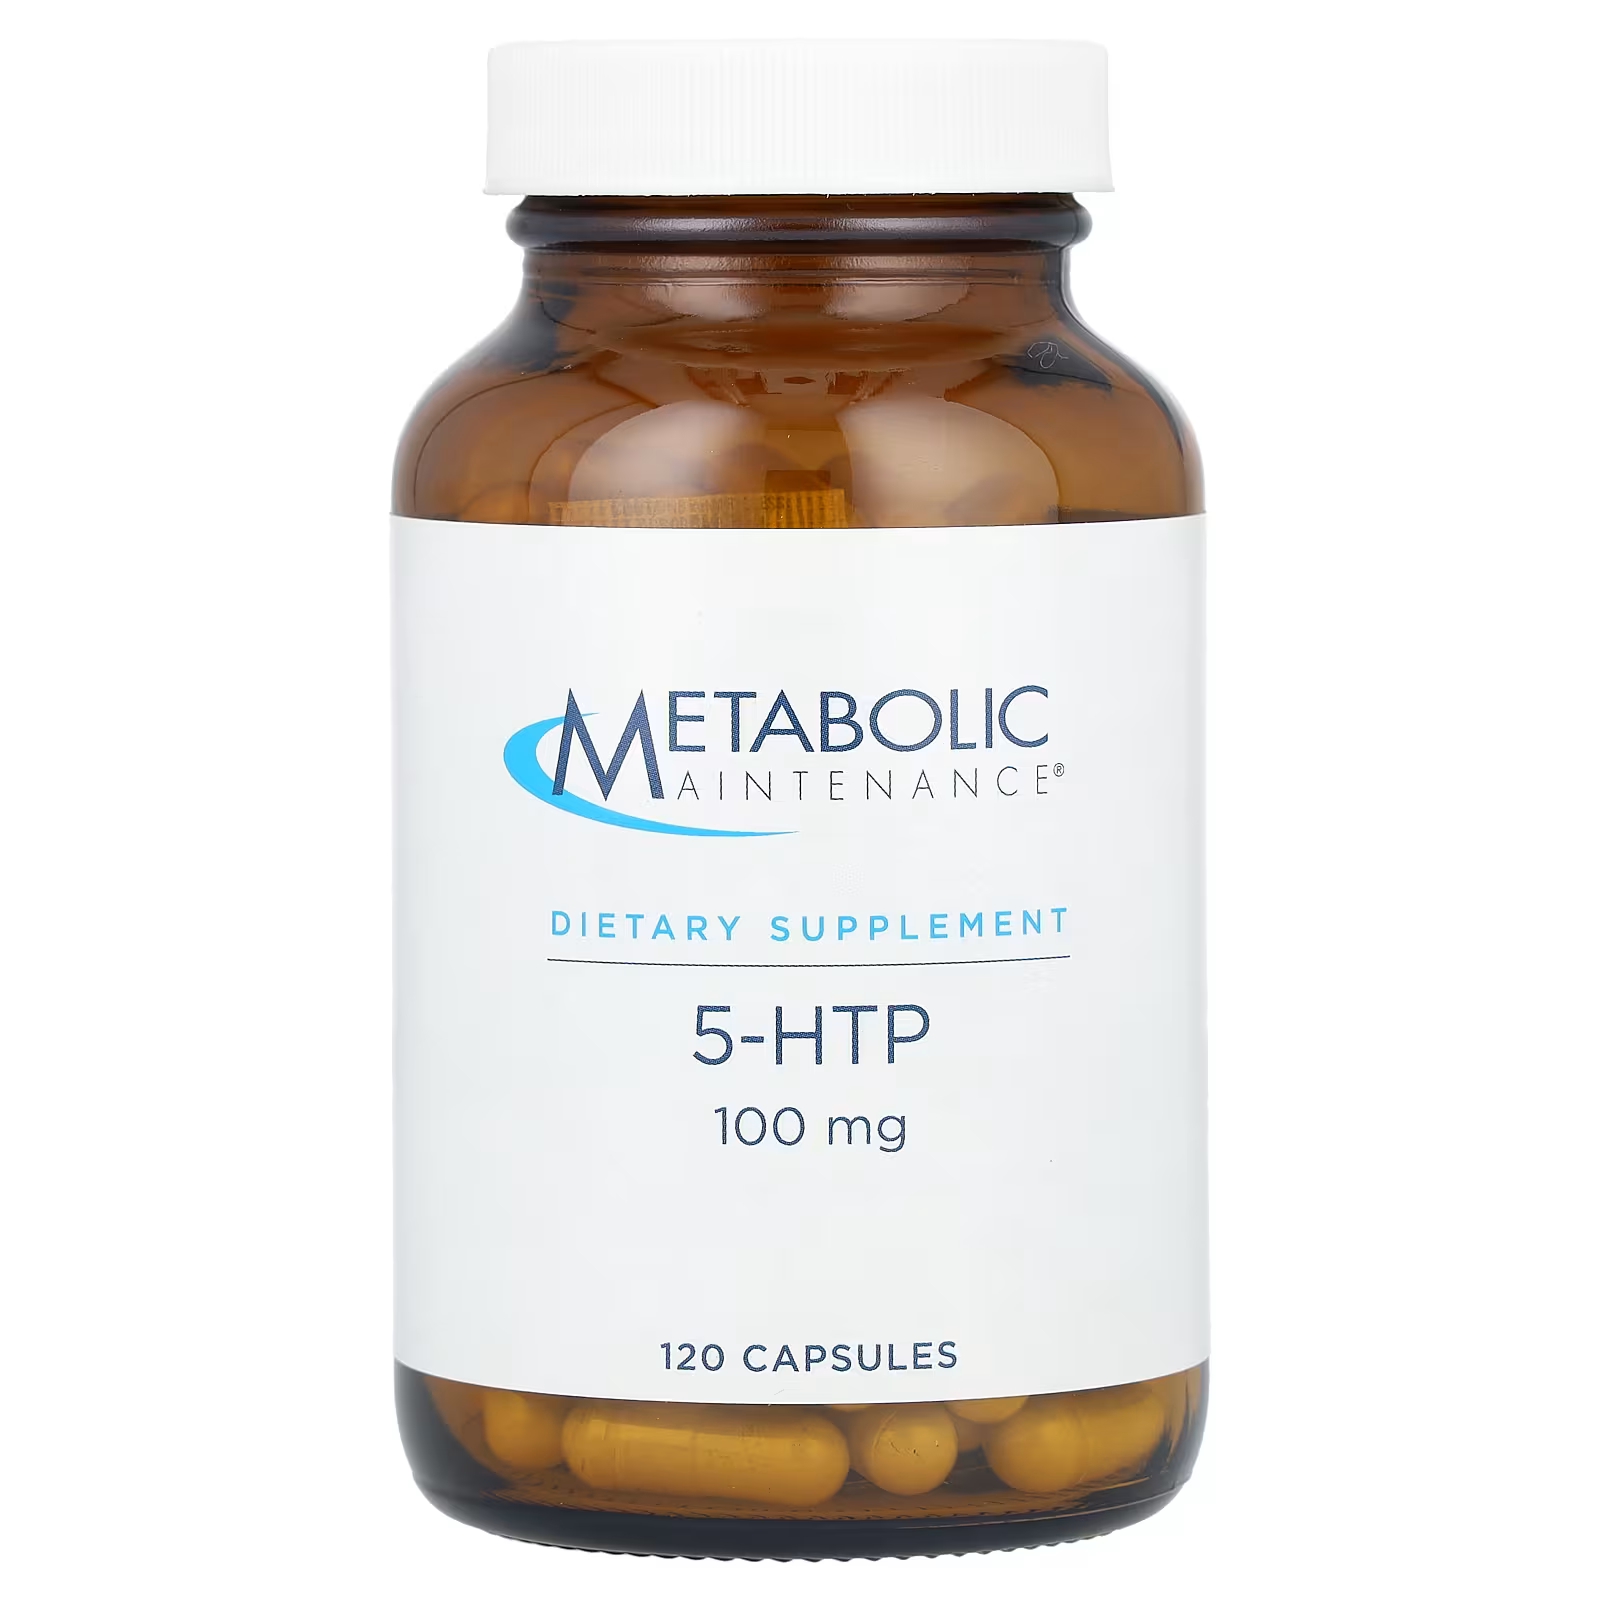 Пищевая добавка Metabolic Maintenance 5-HTP 100 мг, 120 капсул primaforce 5 htp 100 мг 120 капсул